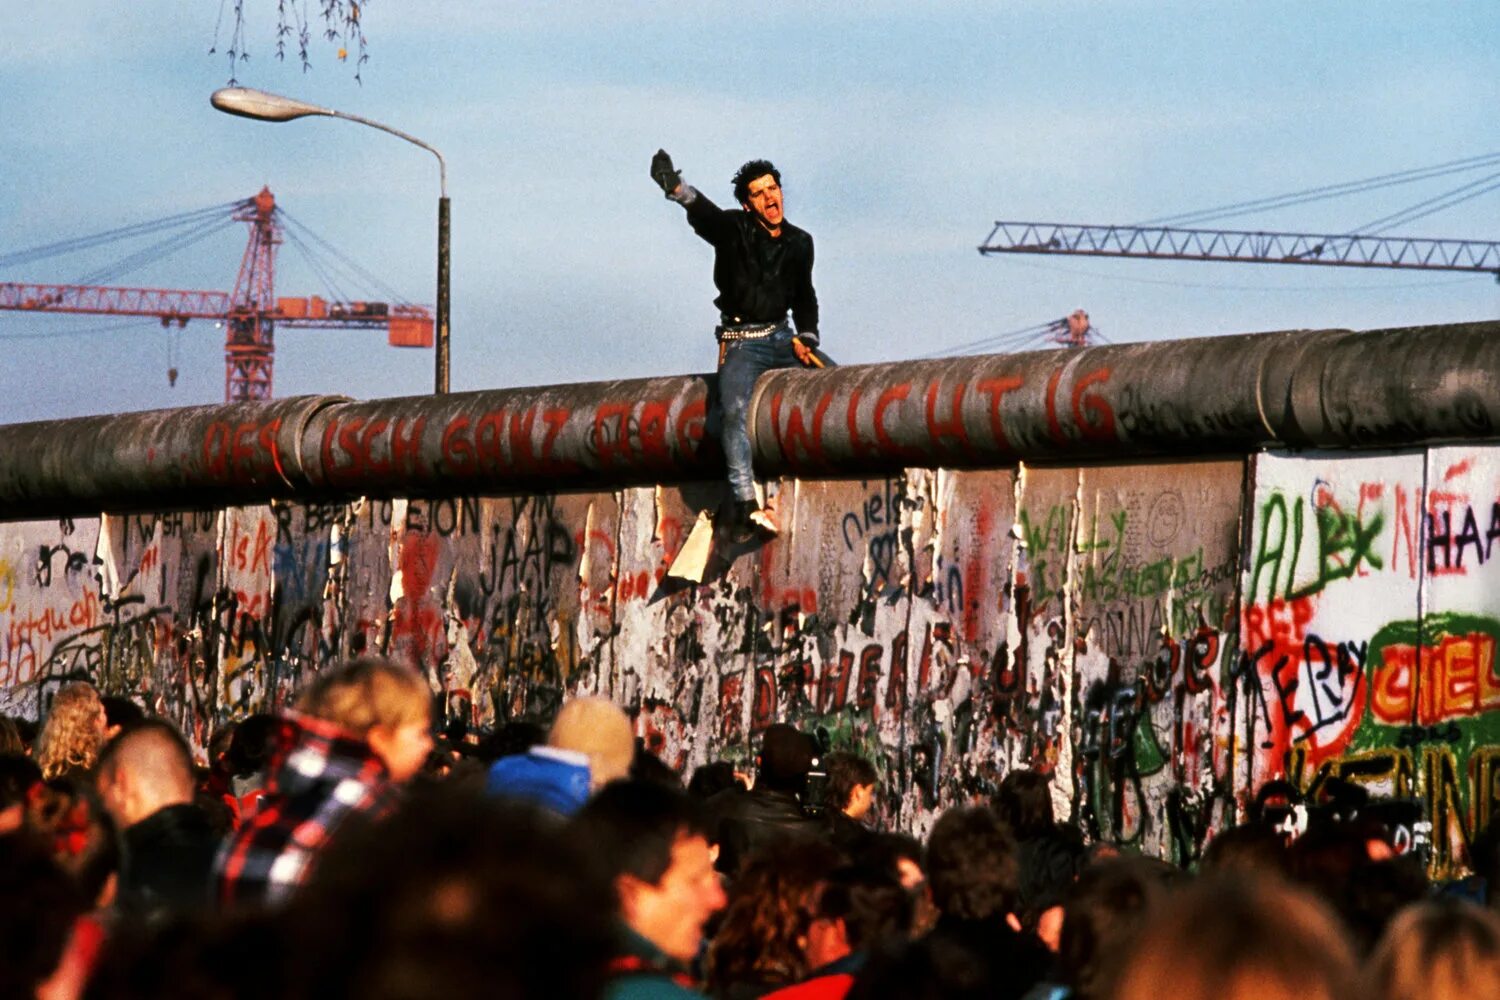 Wall fall. Берлинская стена 1989. Крушение Берлинской стены 1989. 9 Ноября 1989 Берлинская стена. Падение Берлинской стены 1989 г.